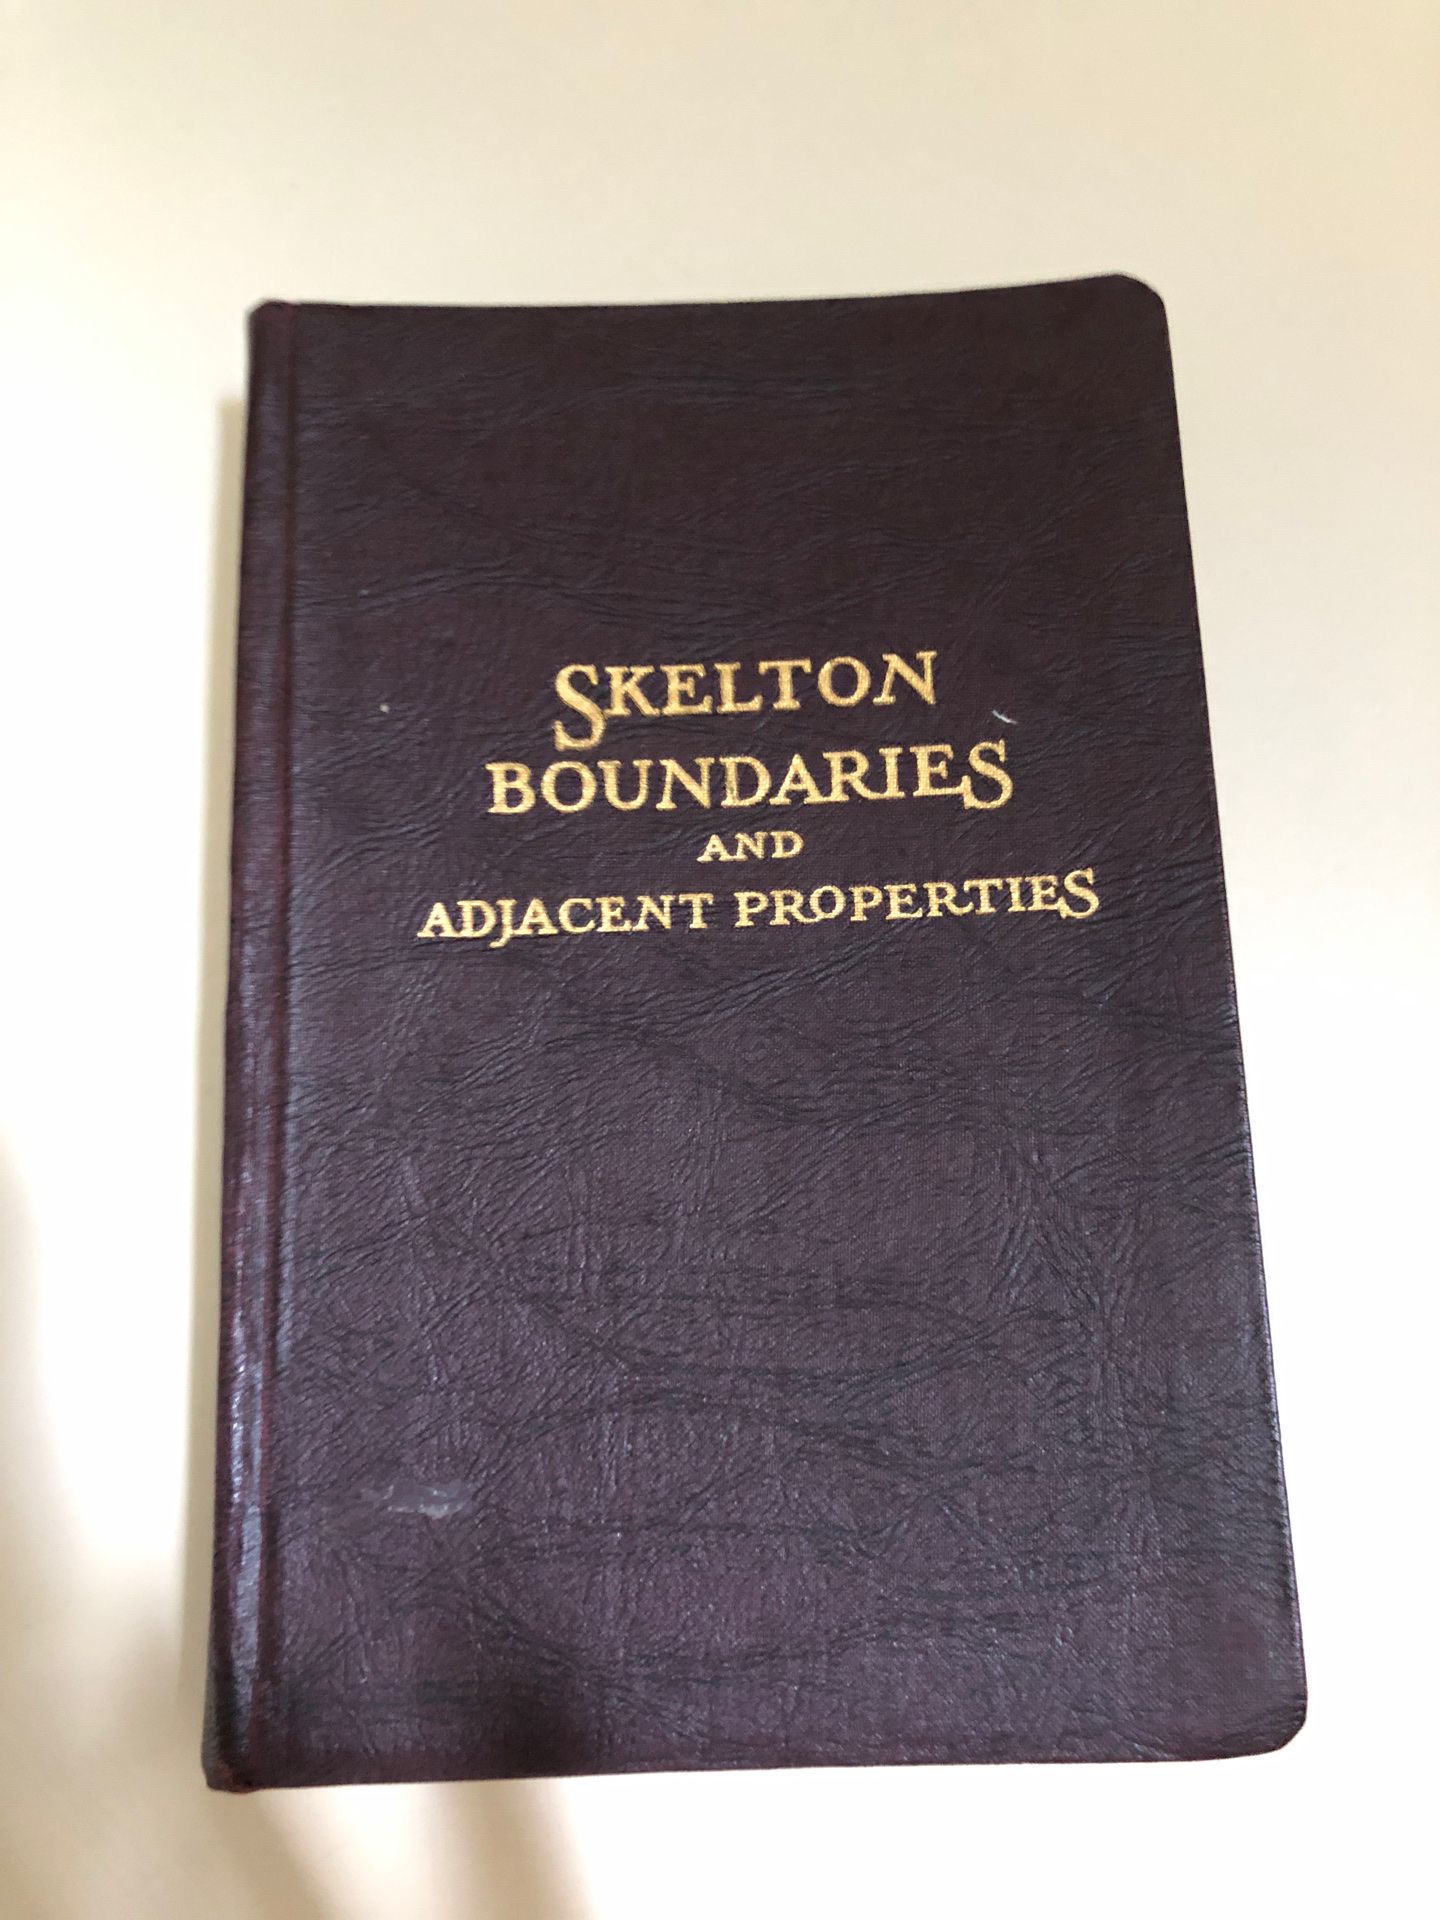 Skelton Boundaries and Adjacent Properties